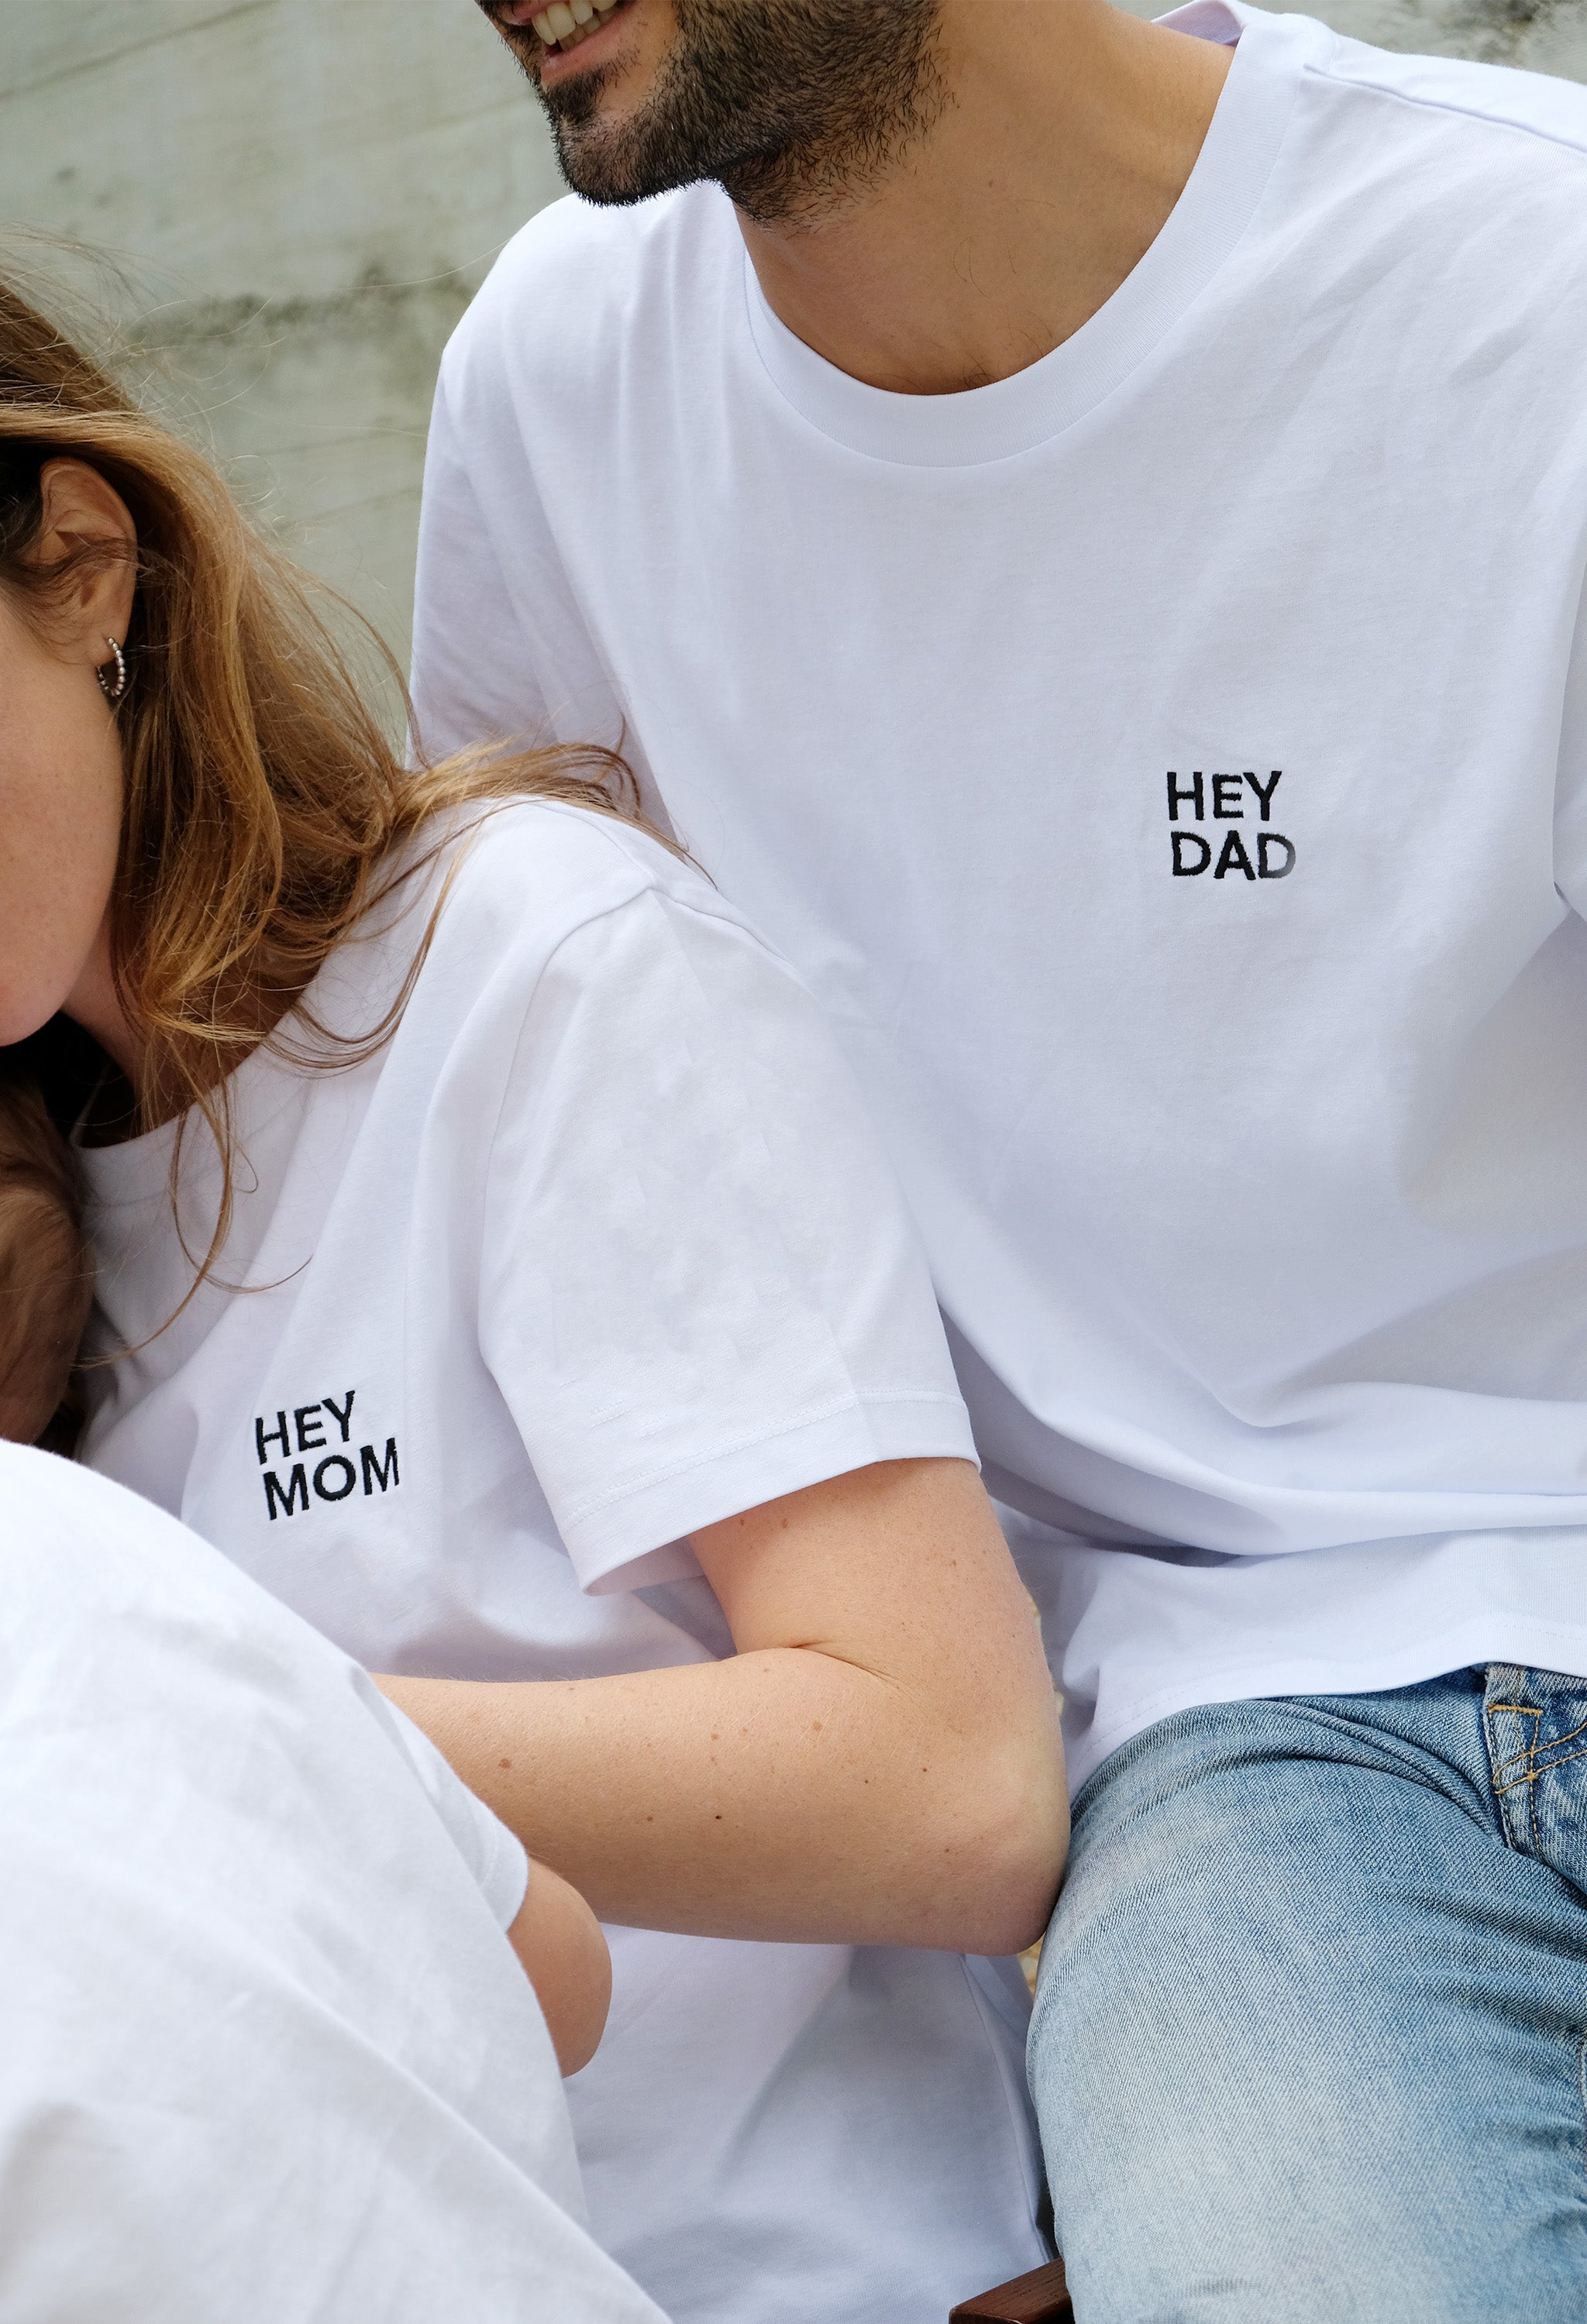 Hey Dad T-shirt